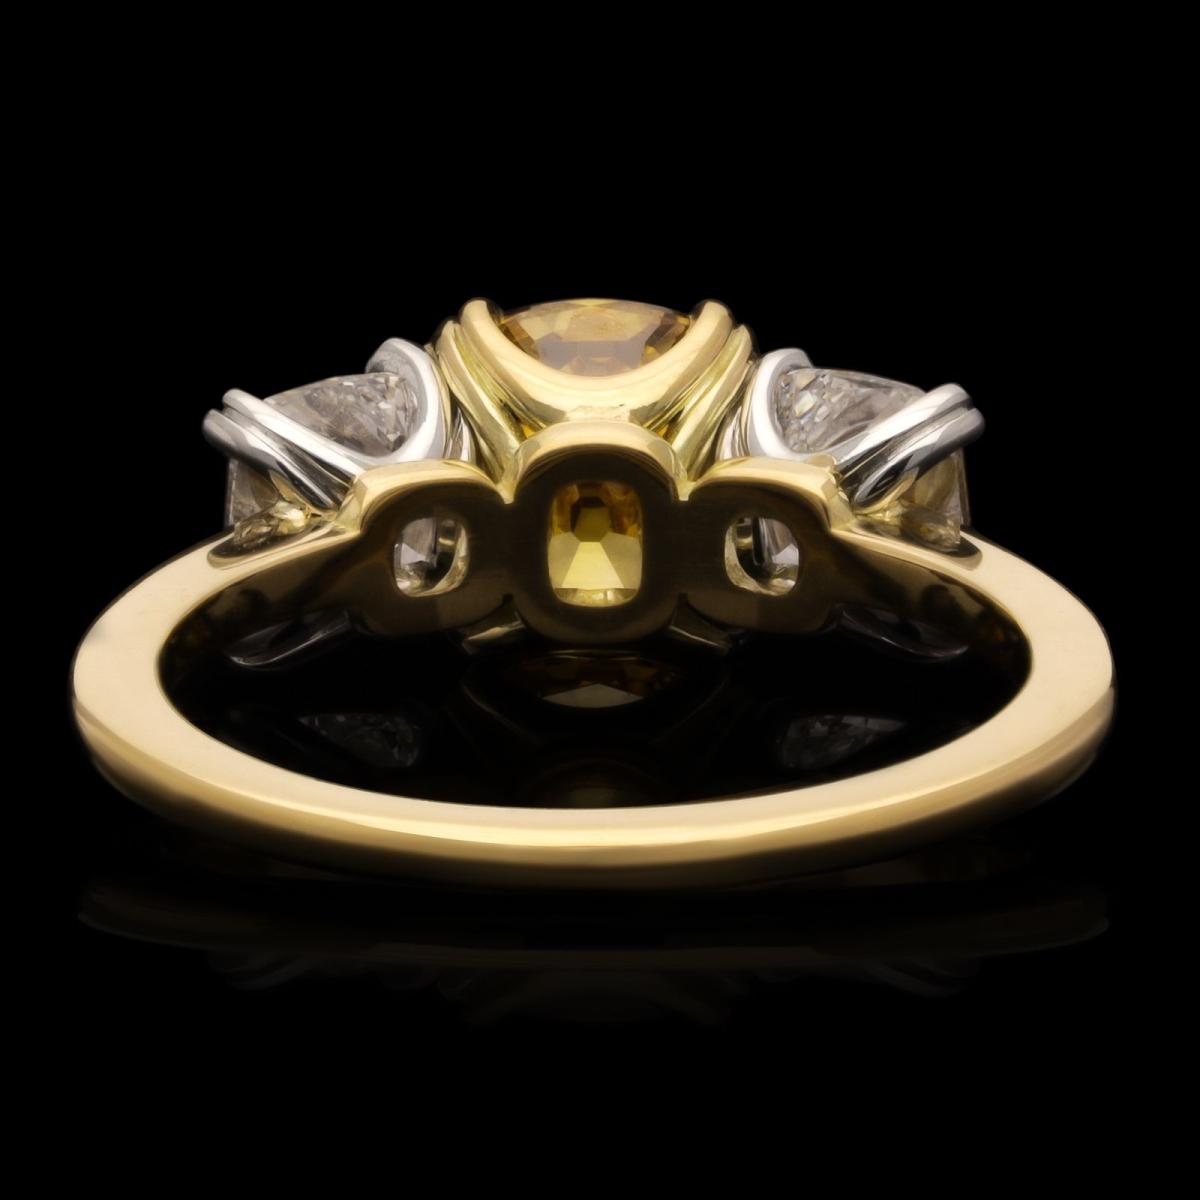 Hancocks 1.42ct Fancy Deep Orangey-Yellow Diamond Ring With Diamond Shoulders